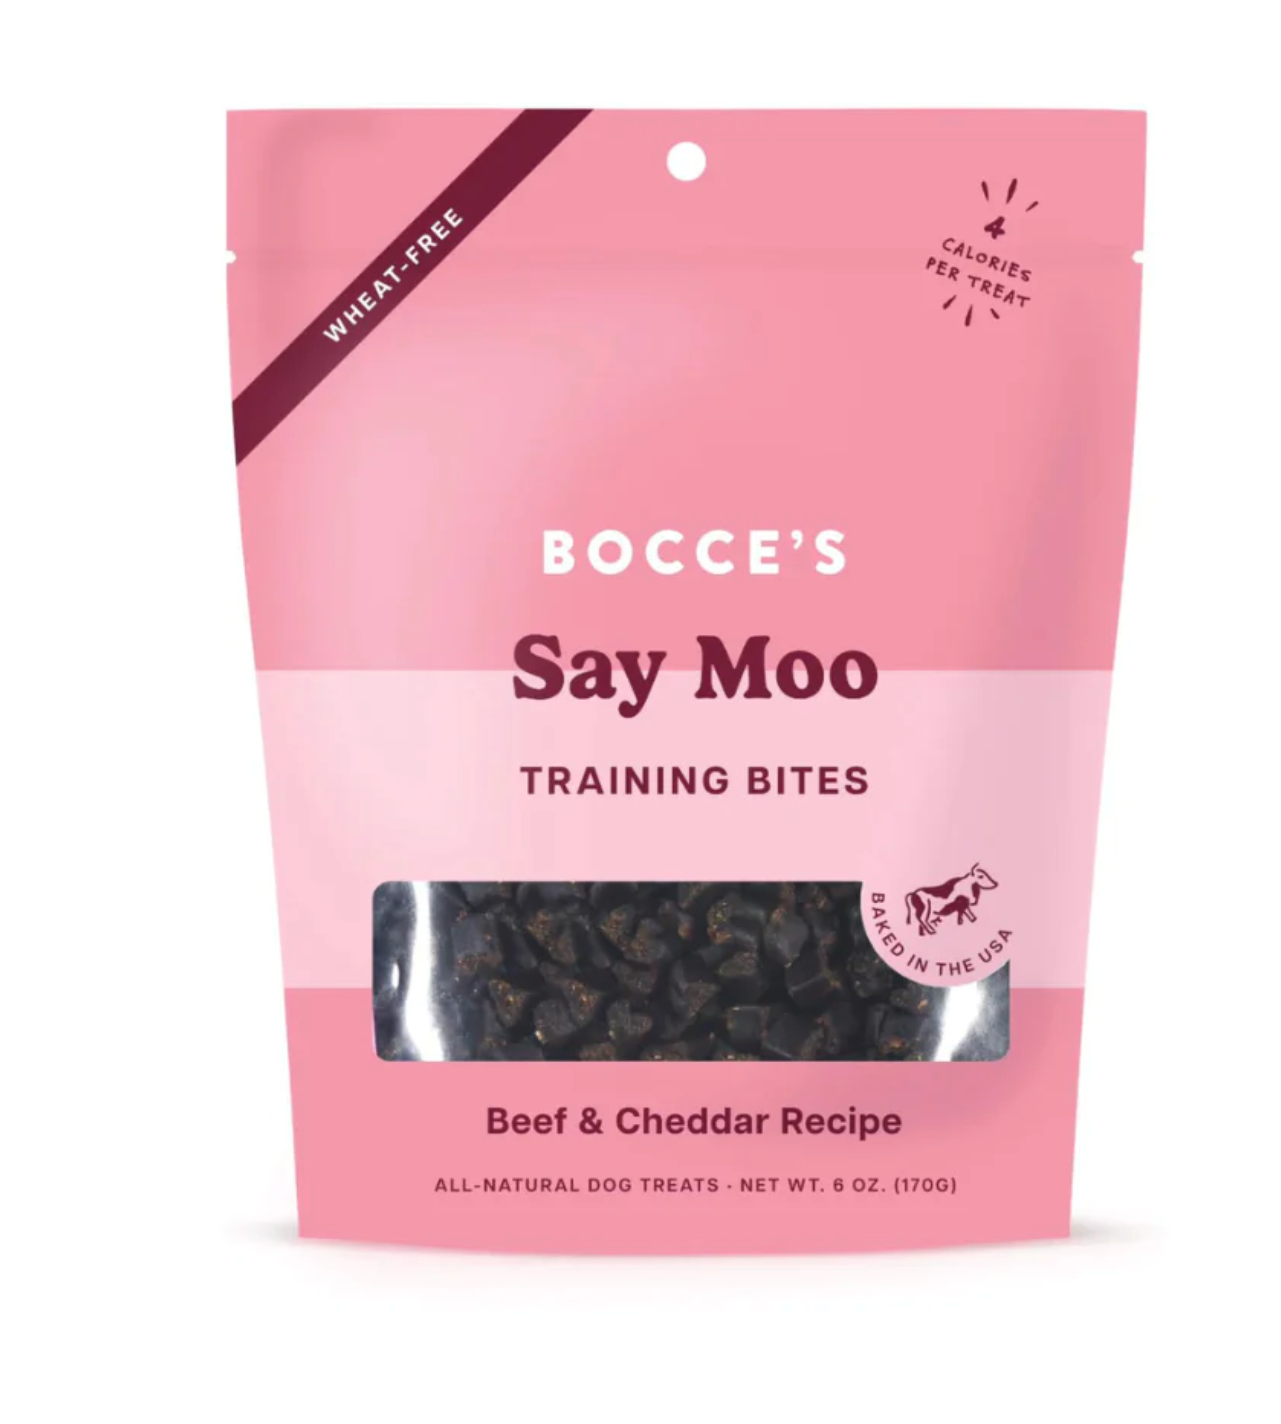 Bocce's Training Bites Say Moo Beef & Cheddar 6 oz.